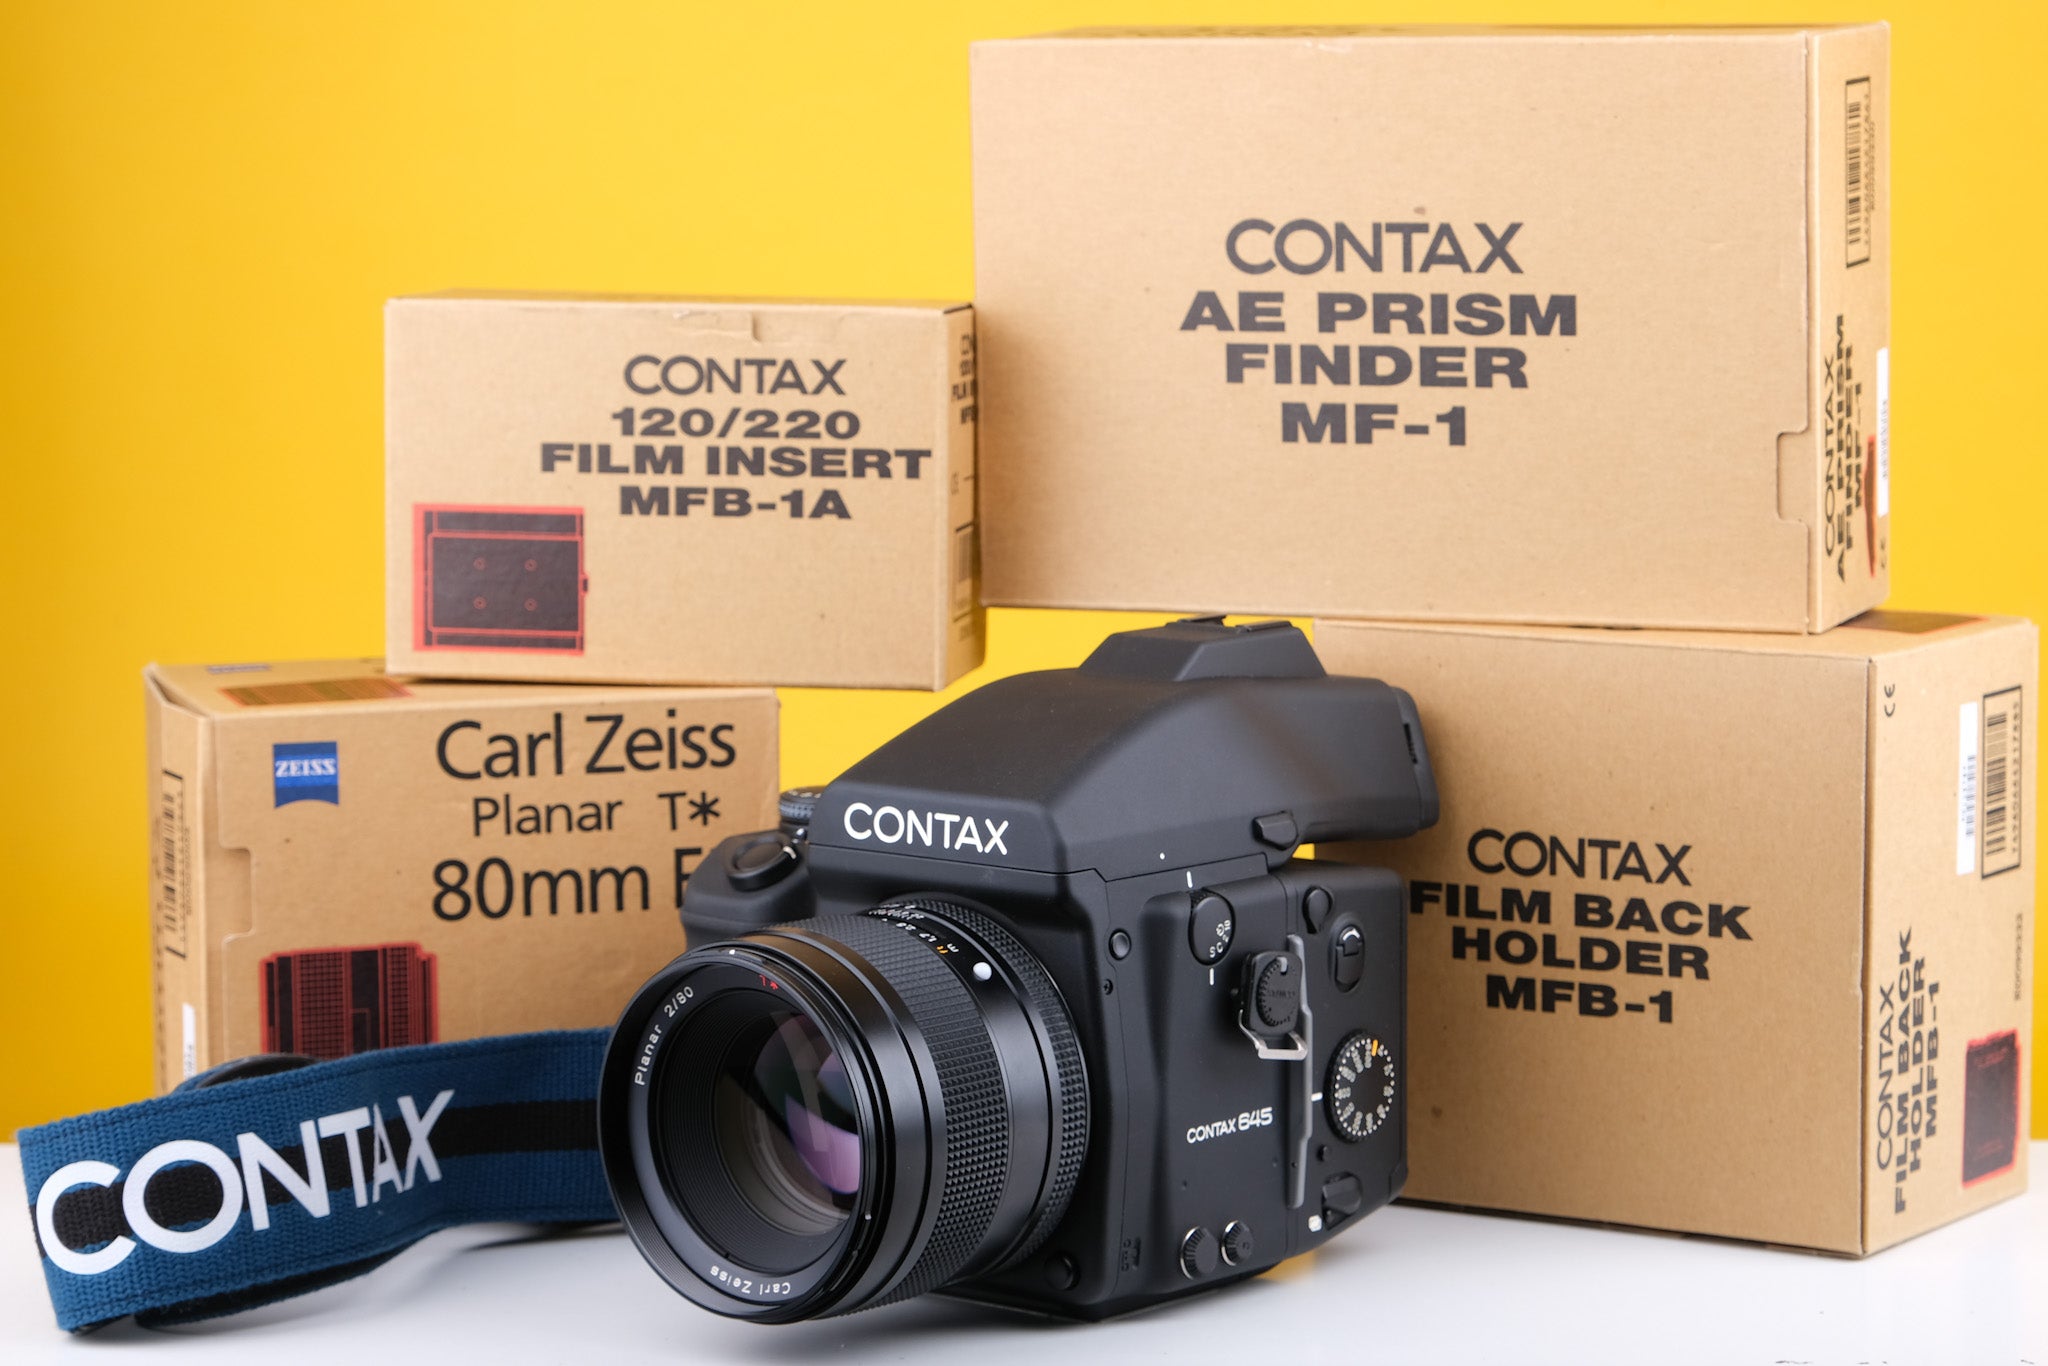 Contax 645 Professional Outfit Medium Format Film Camera Kit